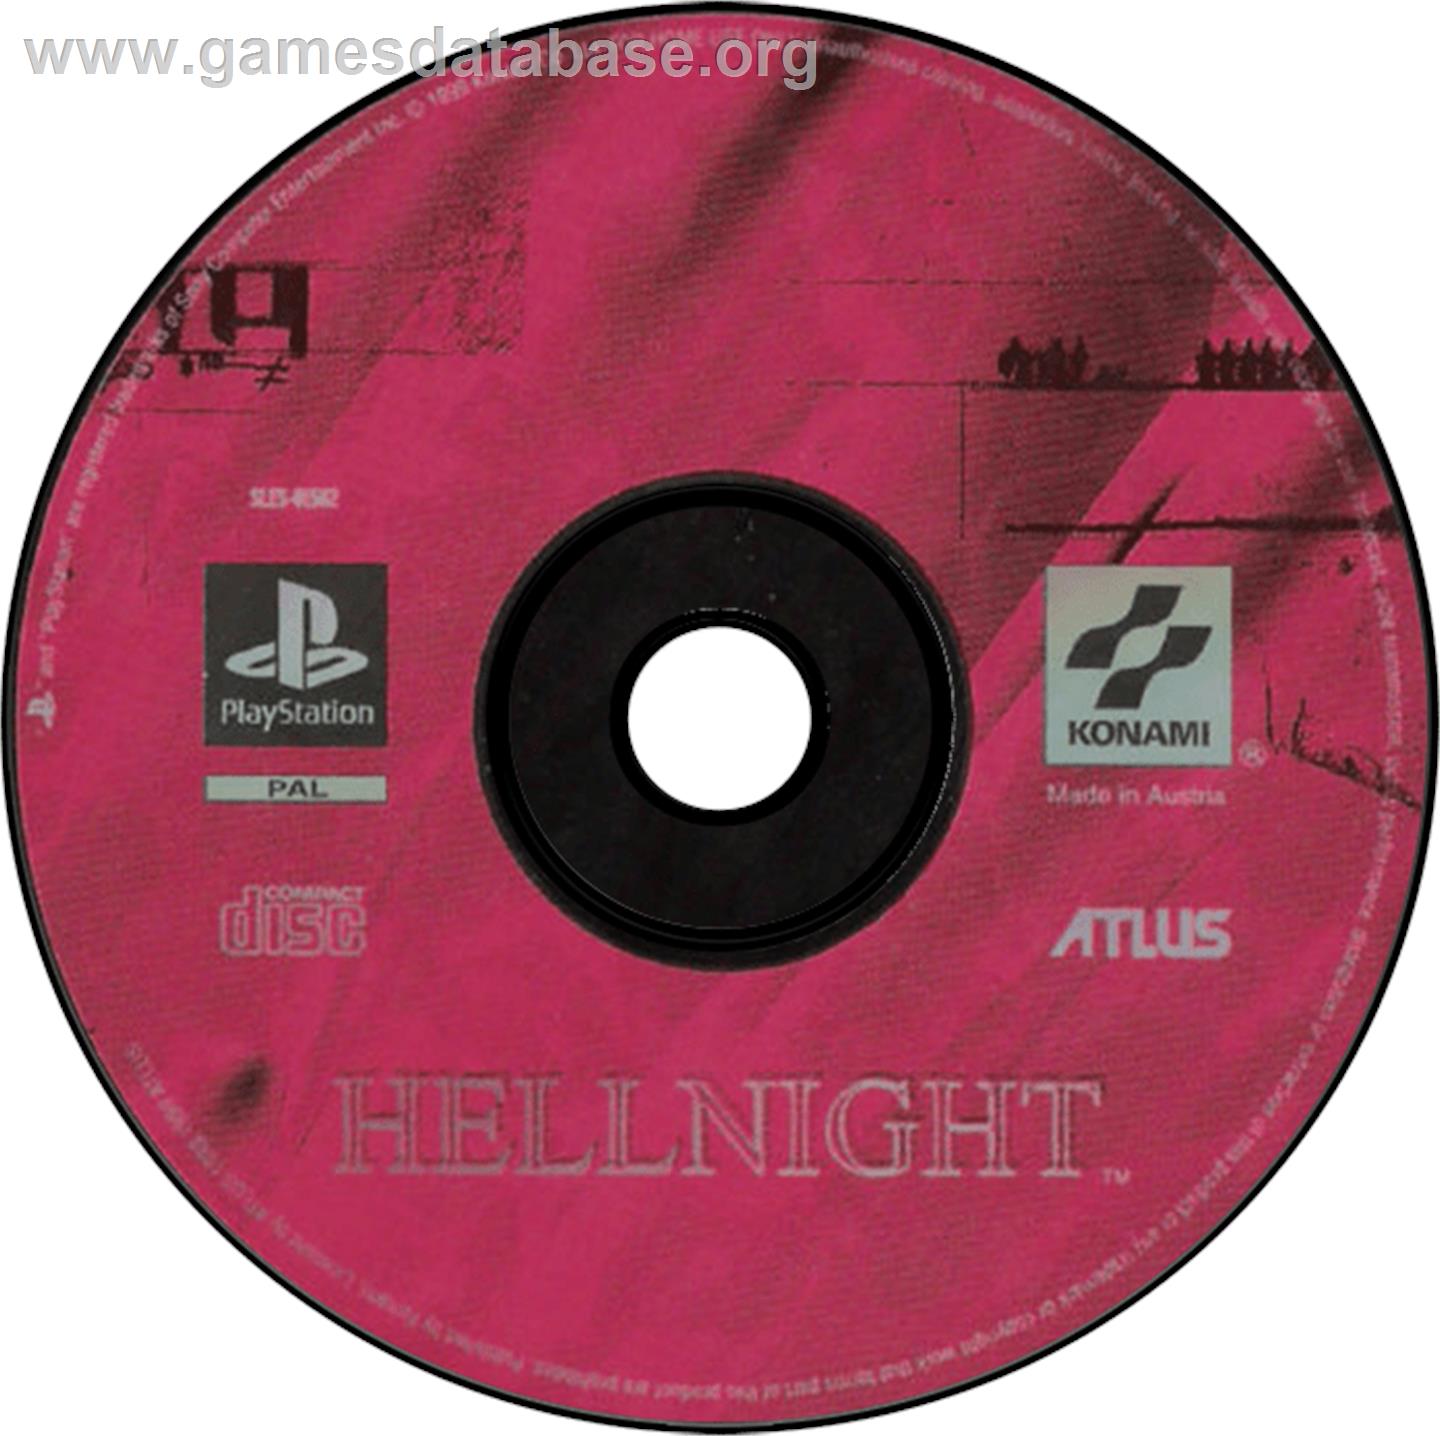 Hellnight - Sony Playstation - Artwork - Disc